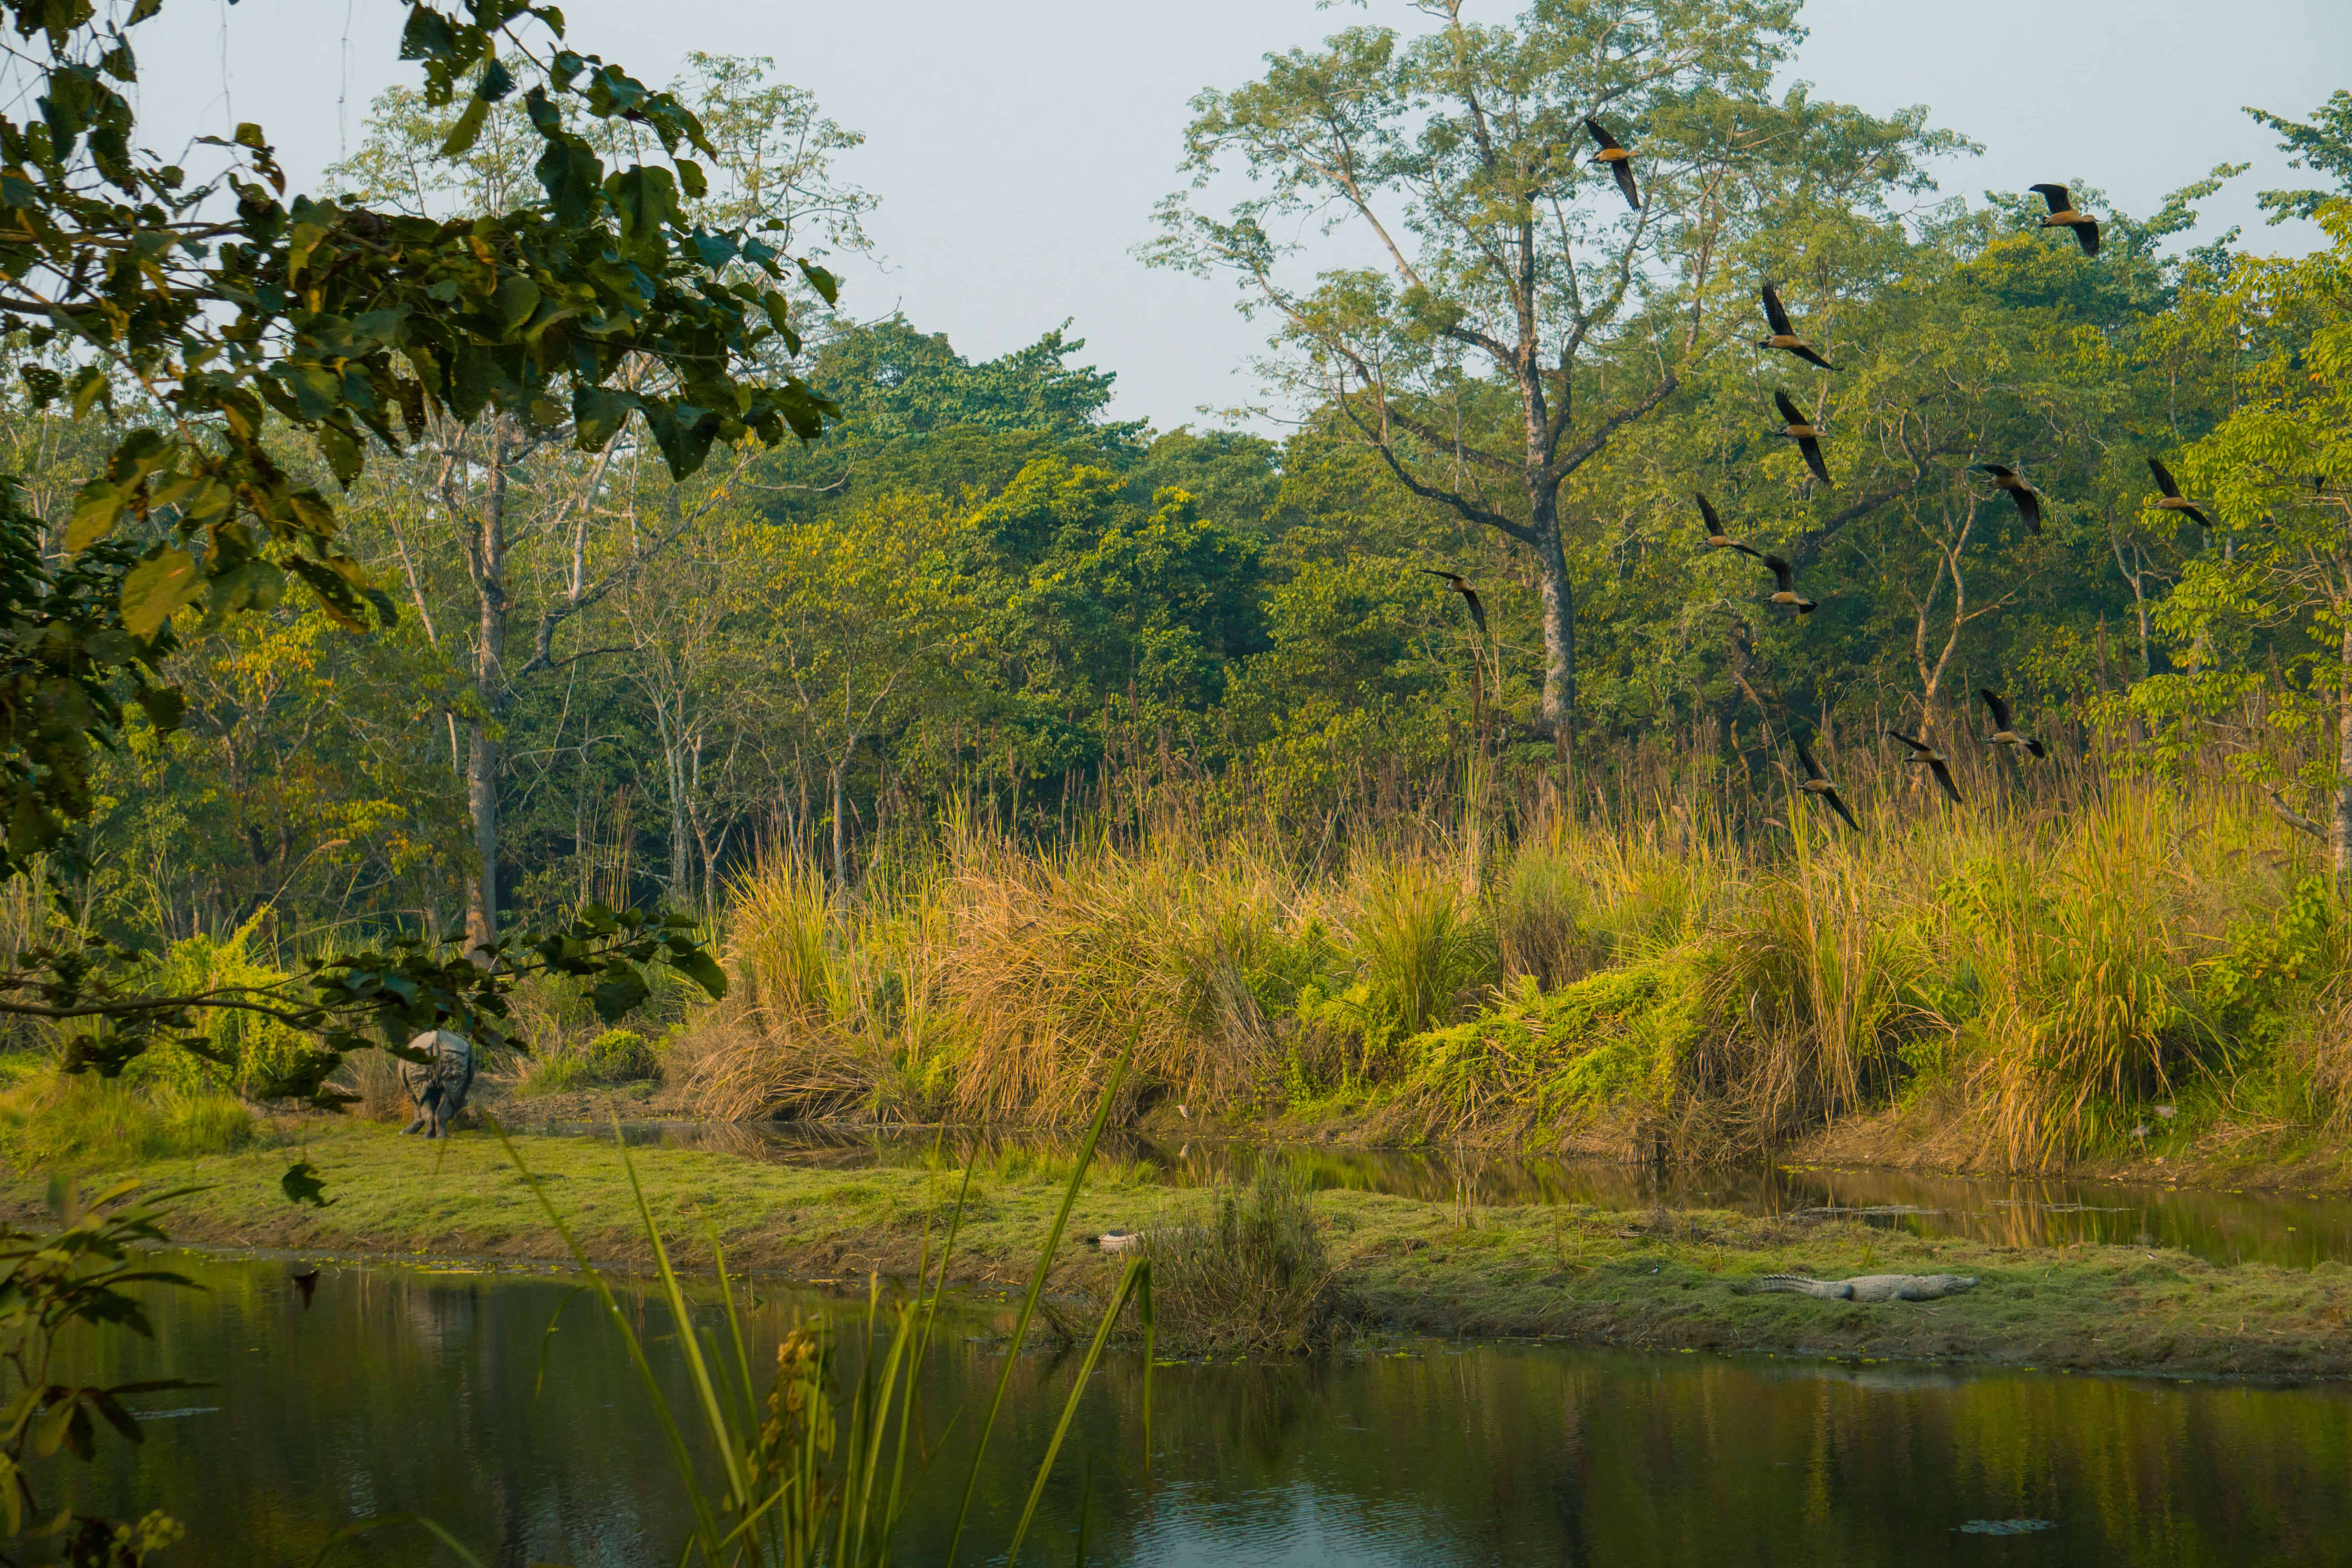 Rhino, crocodiles, and birds in Chitwan National Park